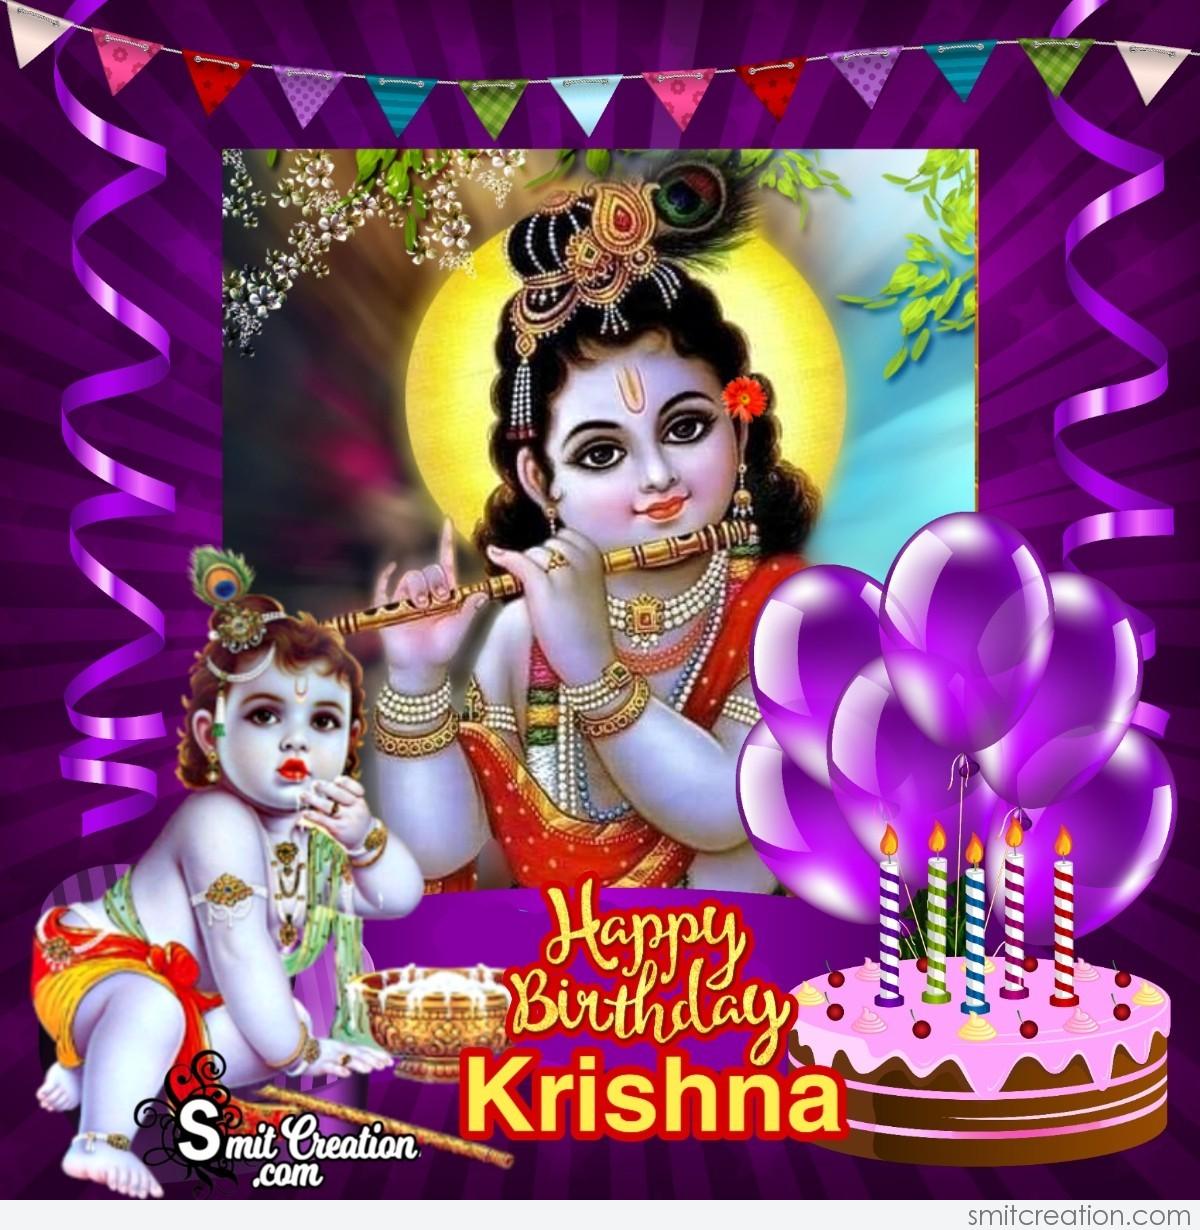 Happy Birthday Krishna Images - SmitCreation.com